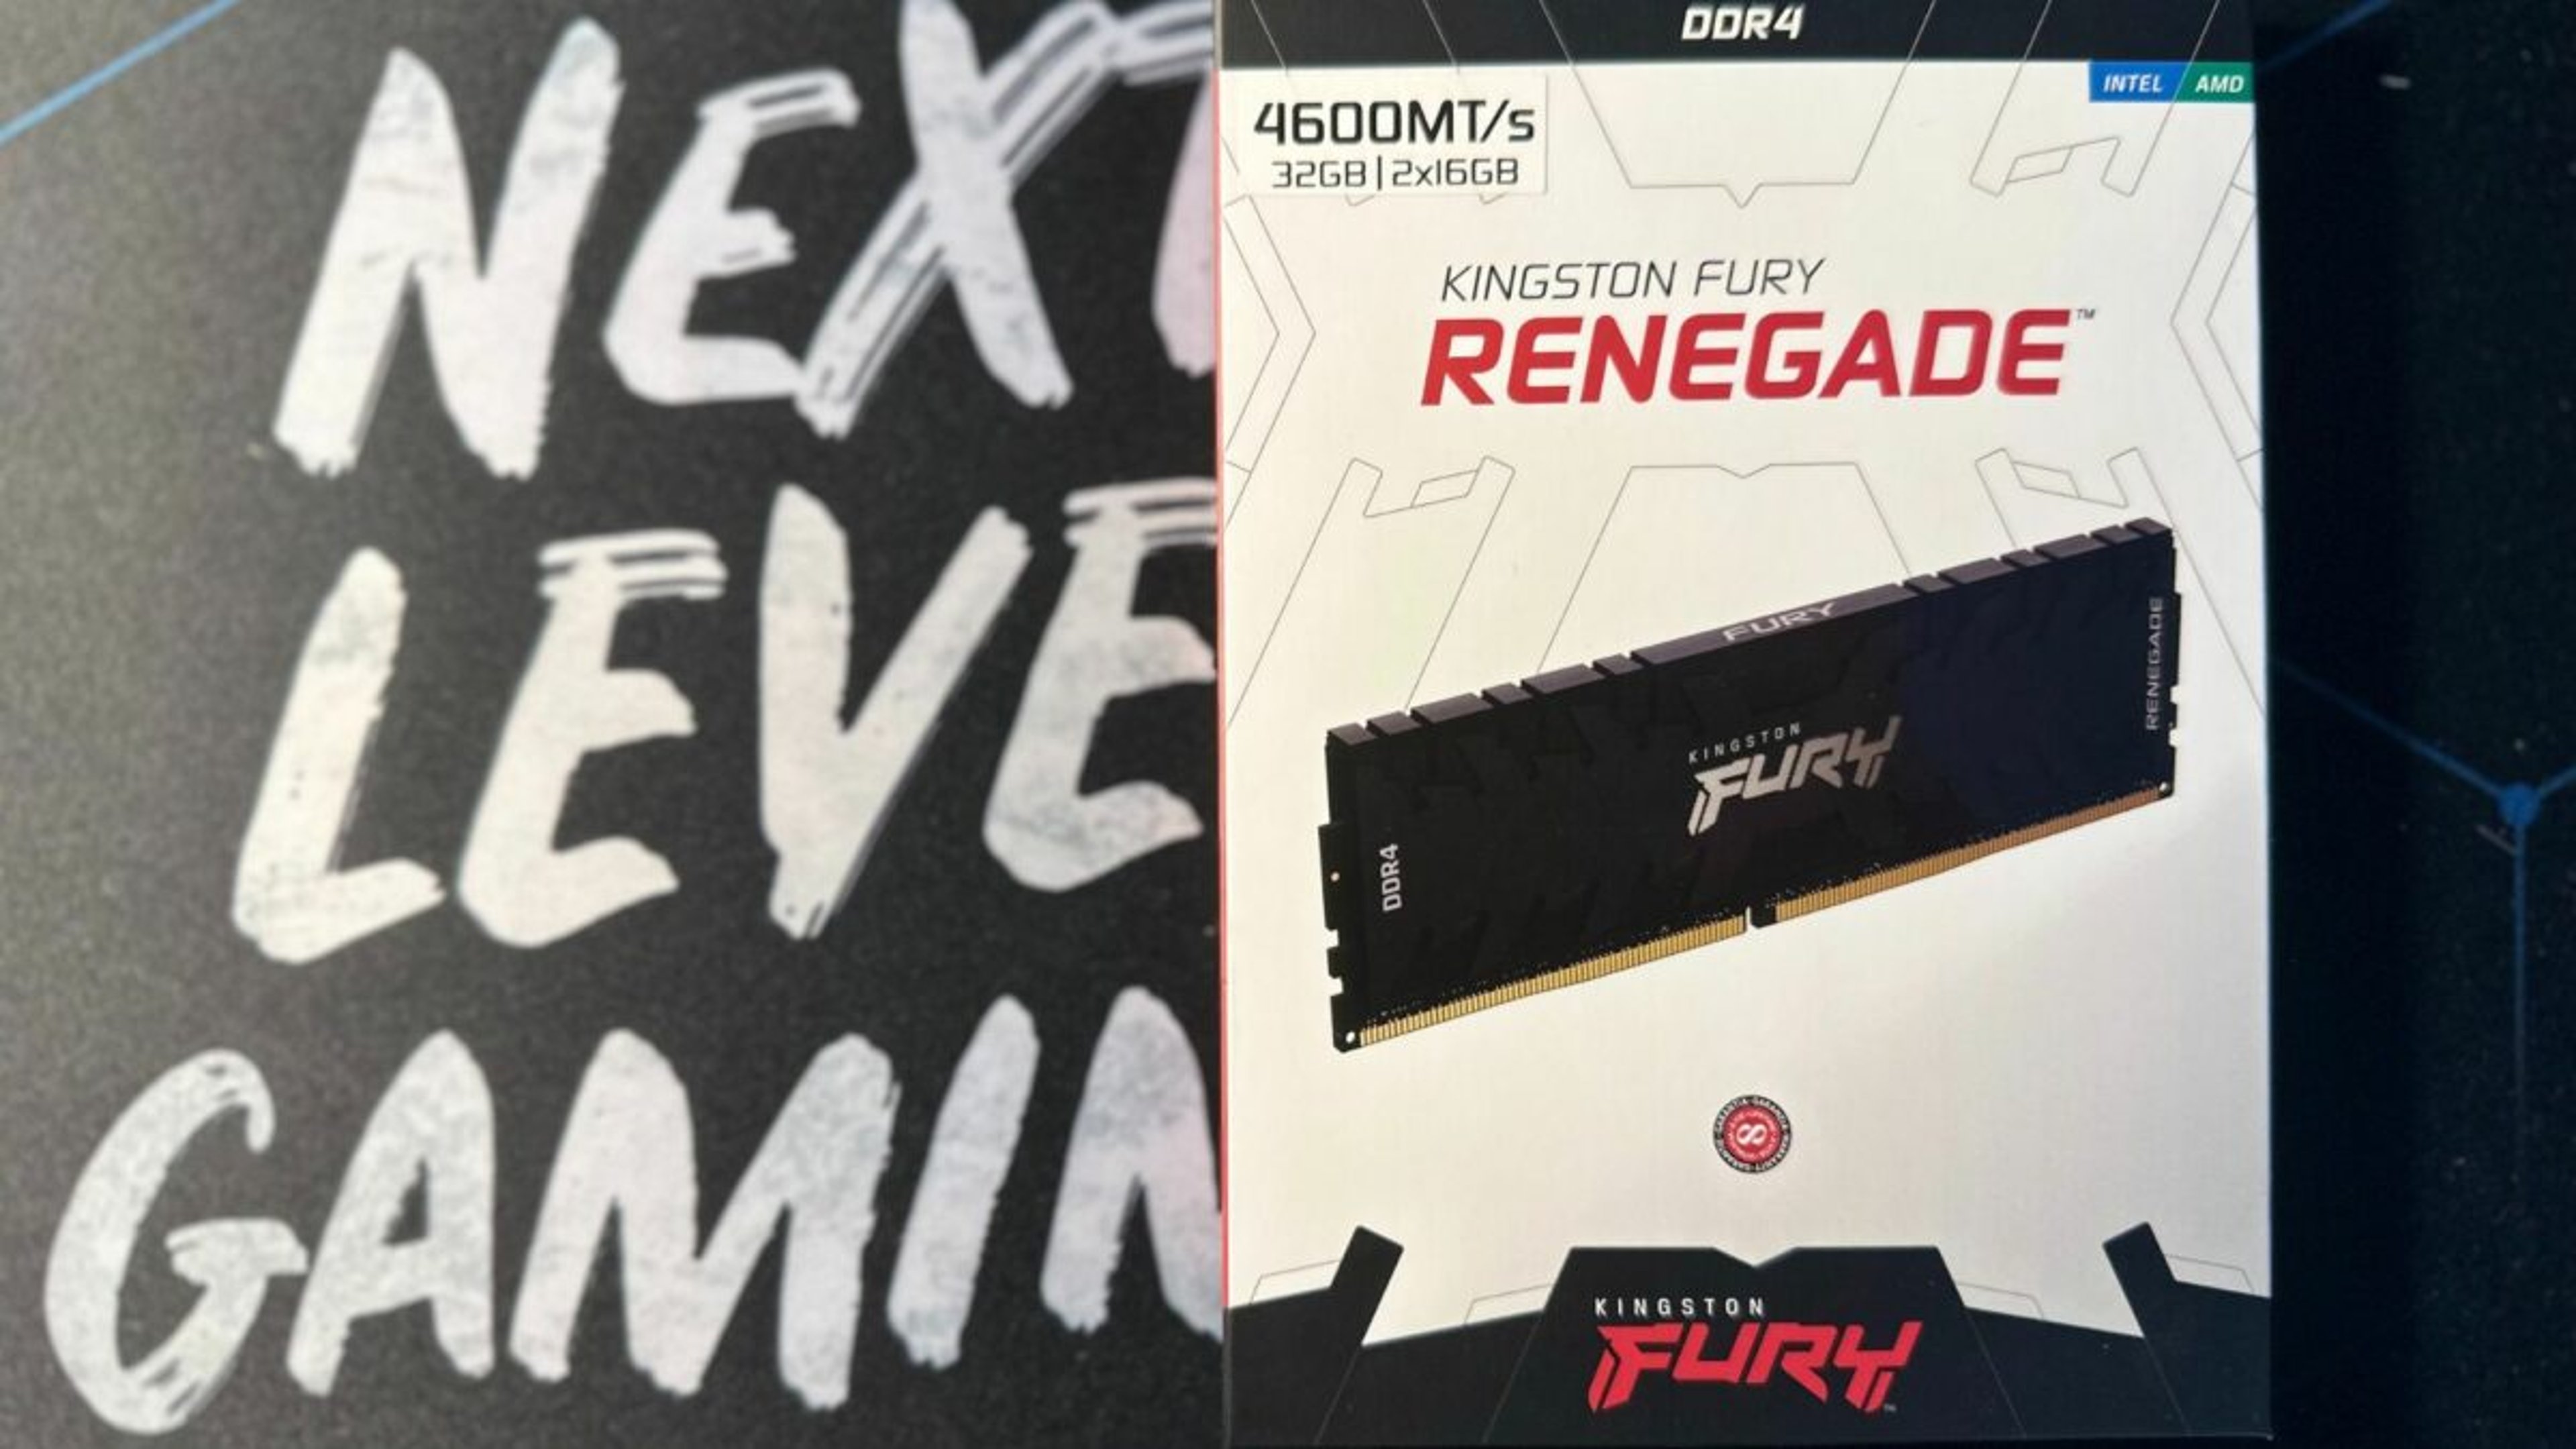 FURY Renegade DDR4, Recensione – Ram da 4600MT/s Cover